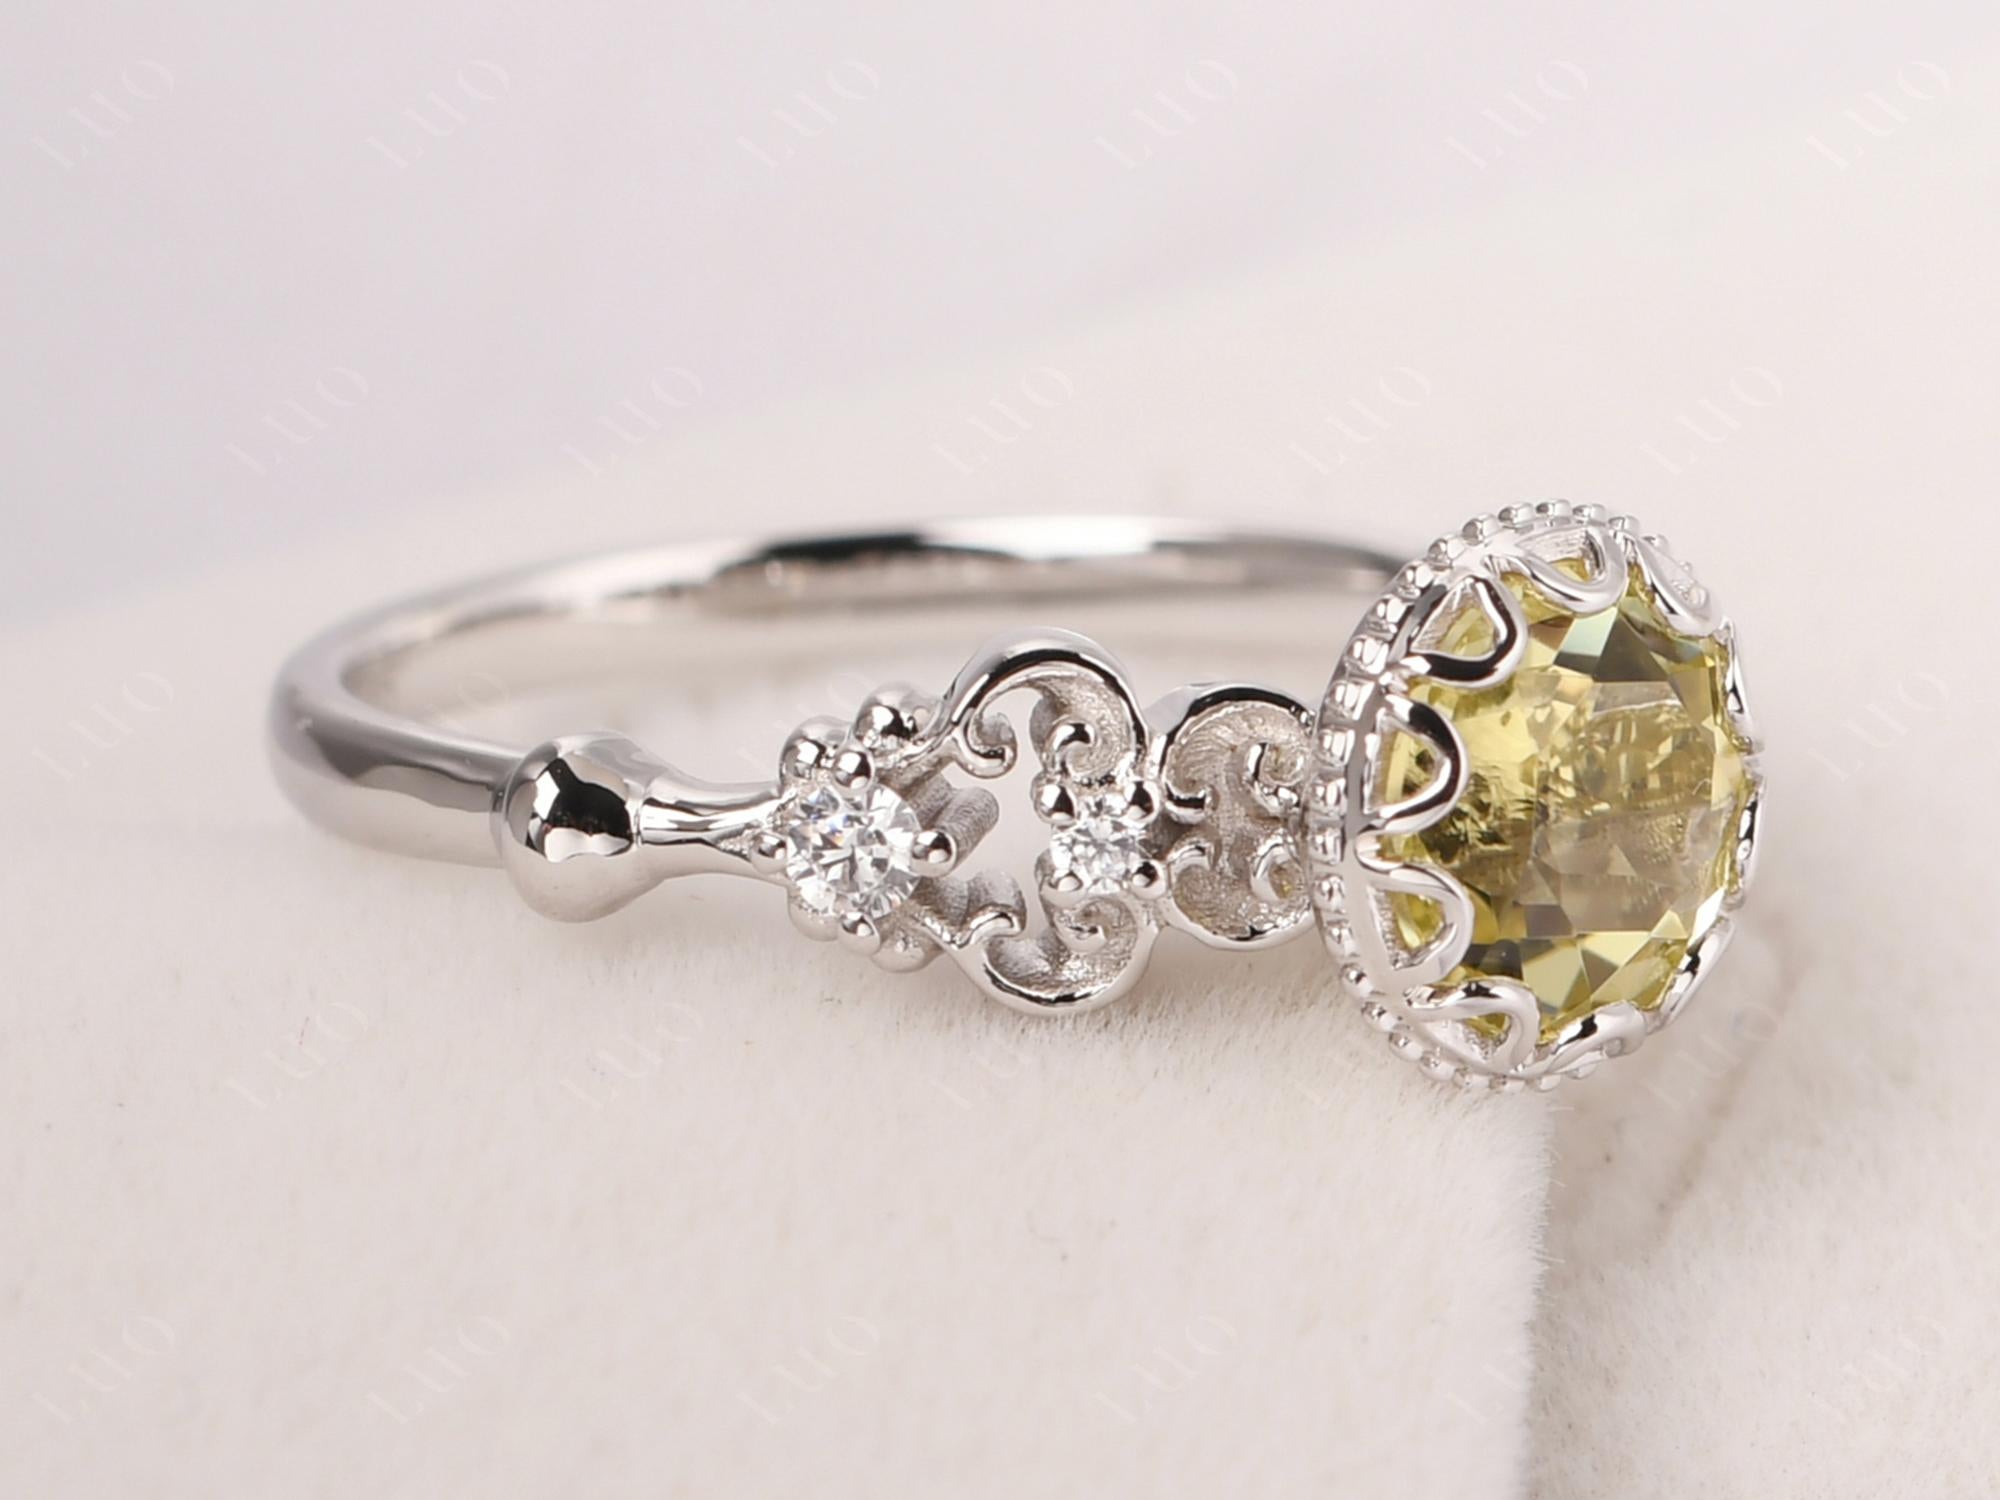 Art Deco Vintage Inspired Lemon Quartz Ring - LUO Jewelry